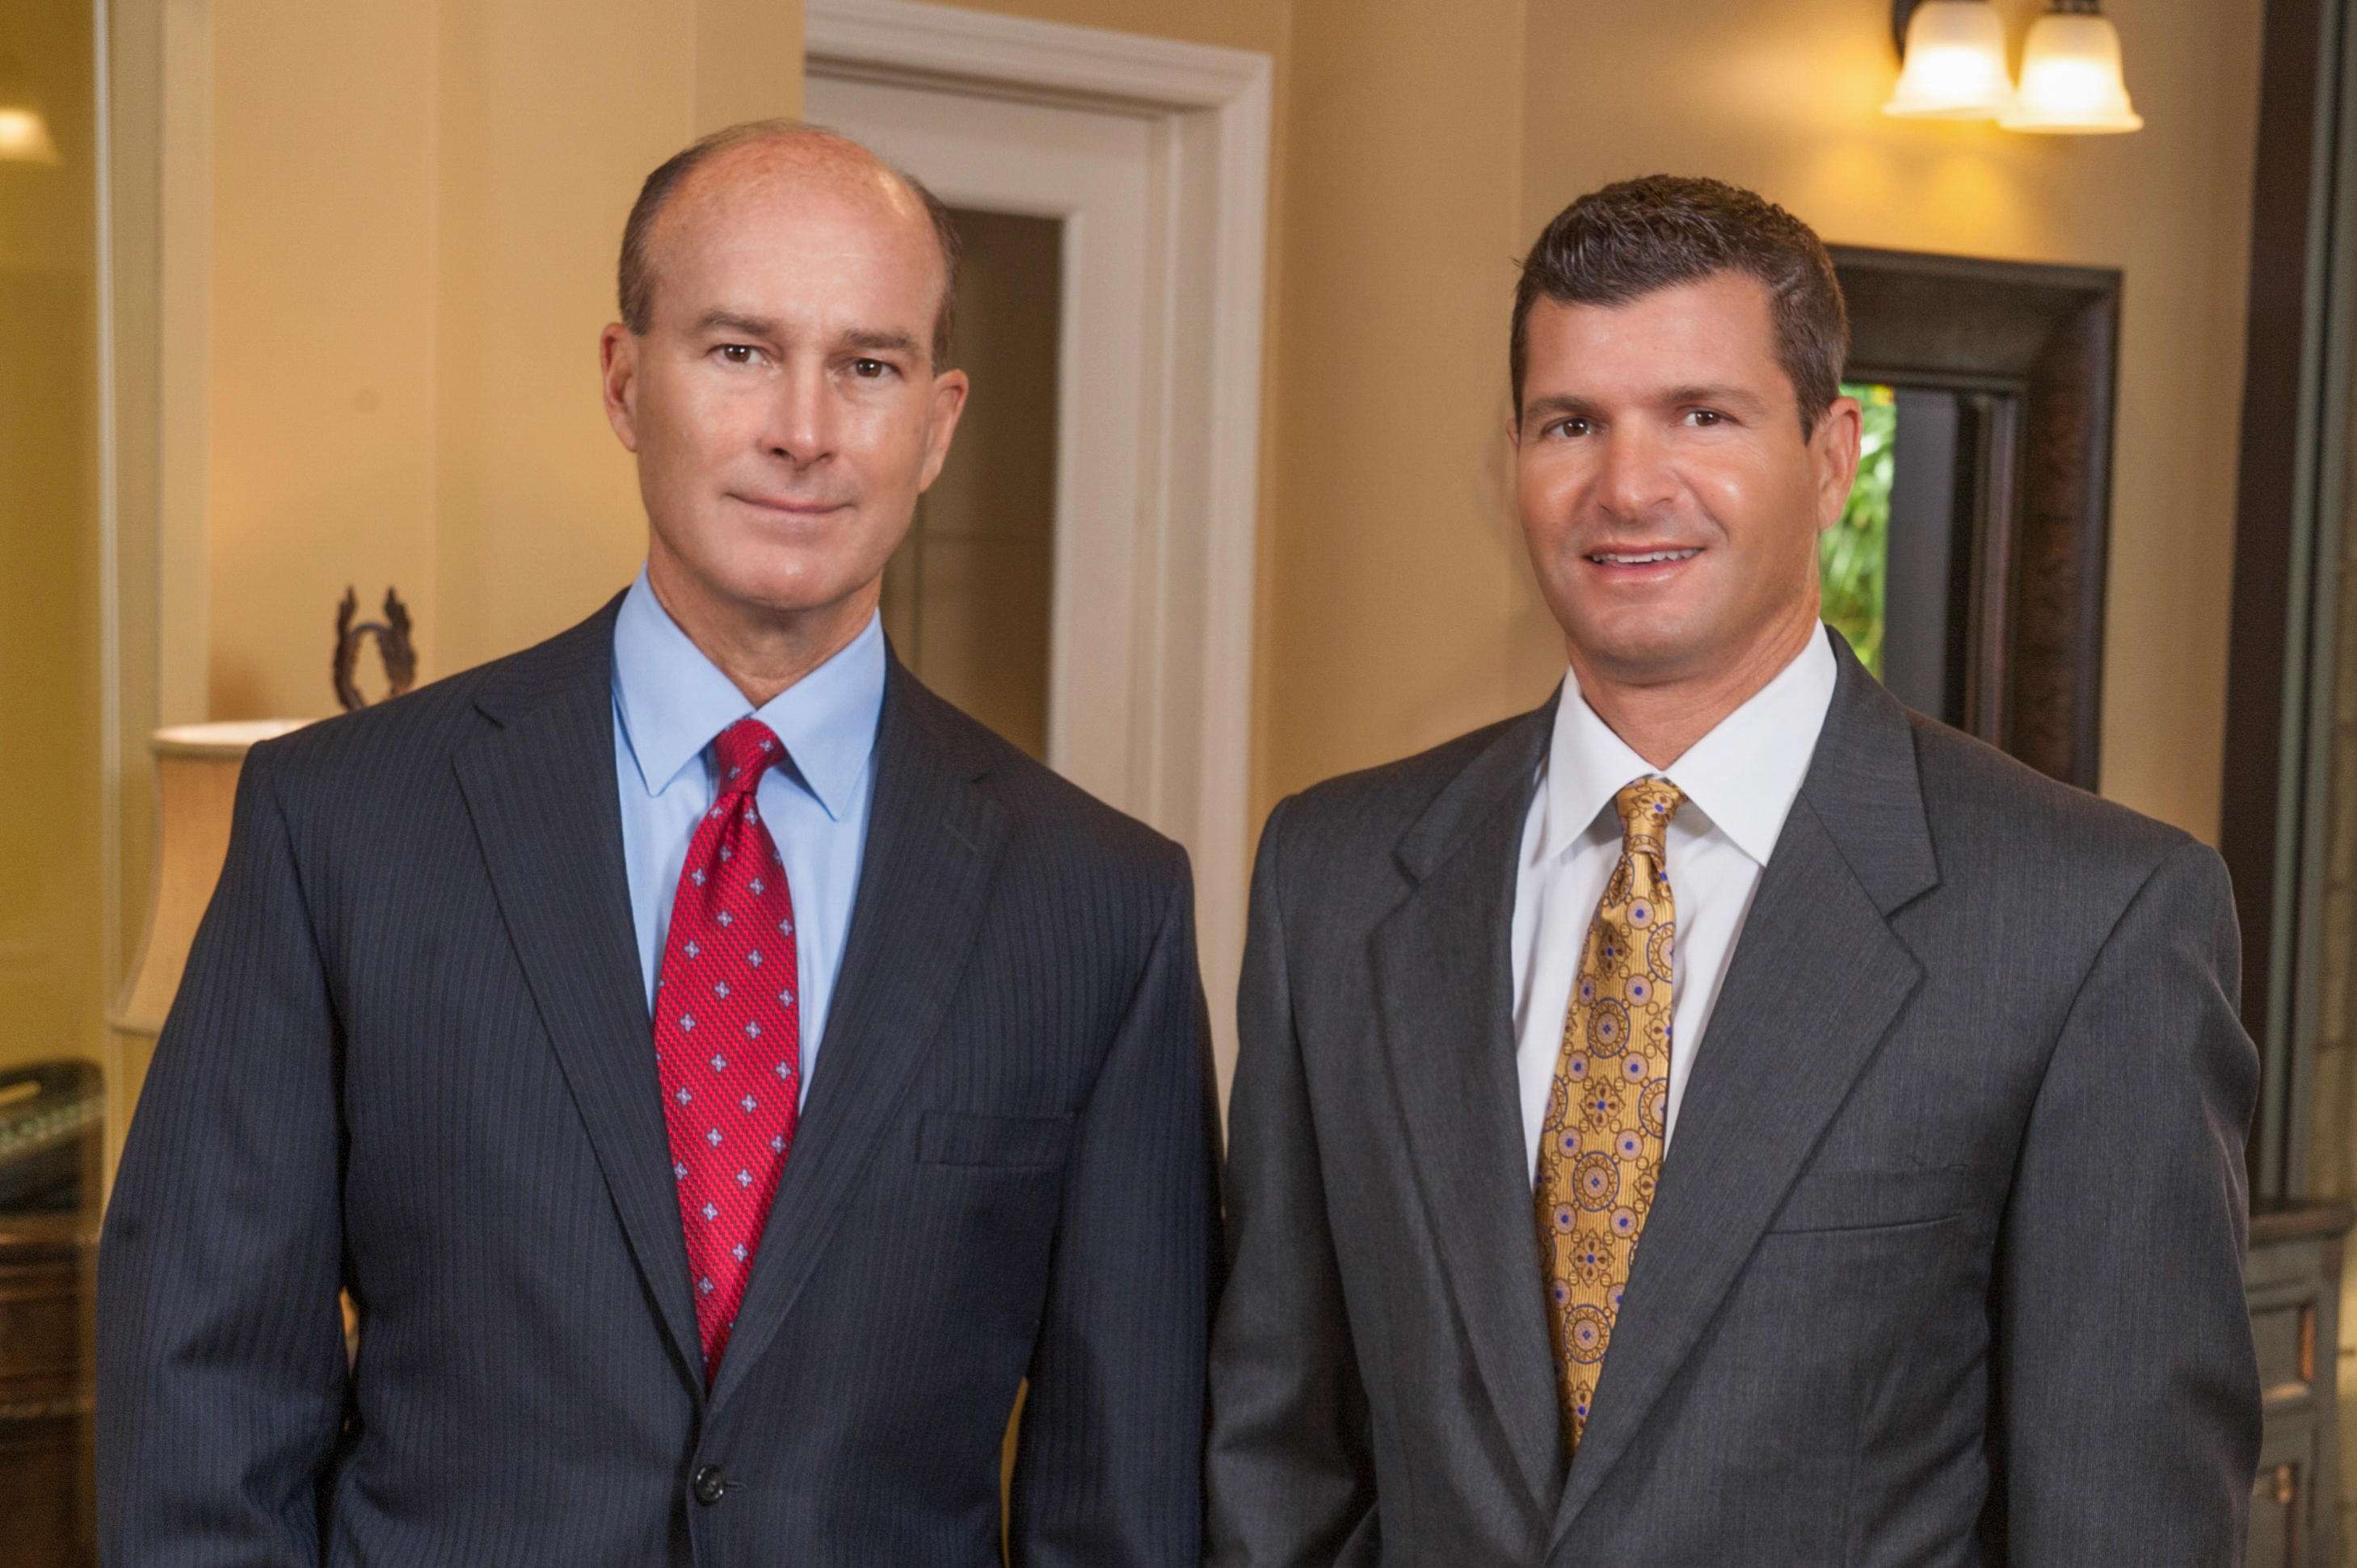 Winters & Yonker Personal Injury Lawyers - Tampa, FL personal injury lawyers